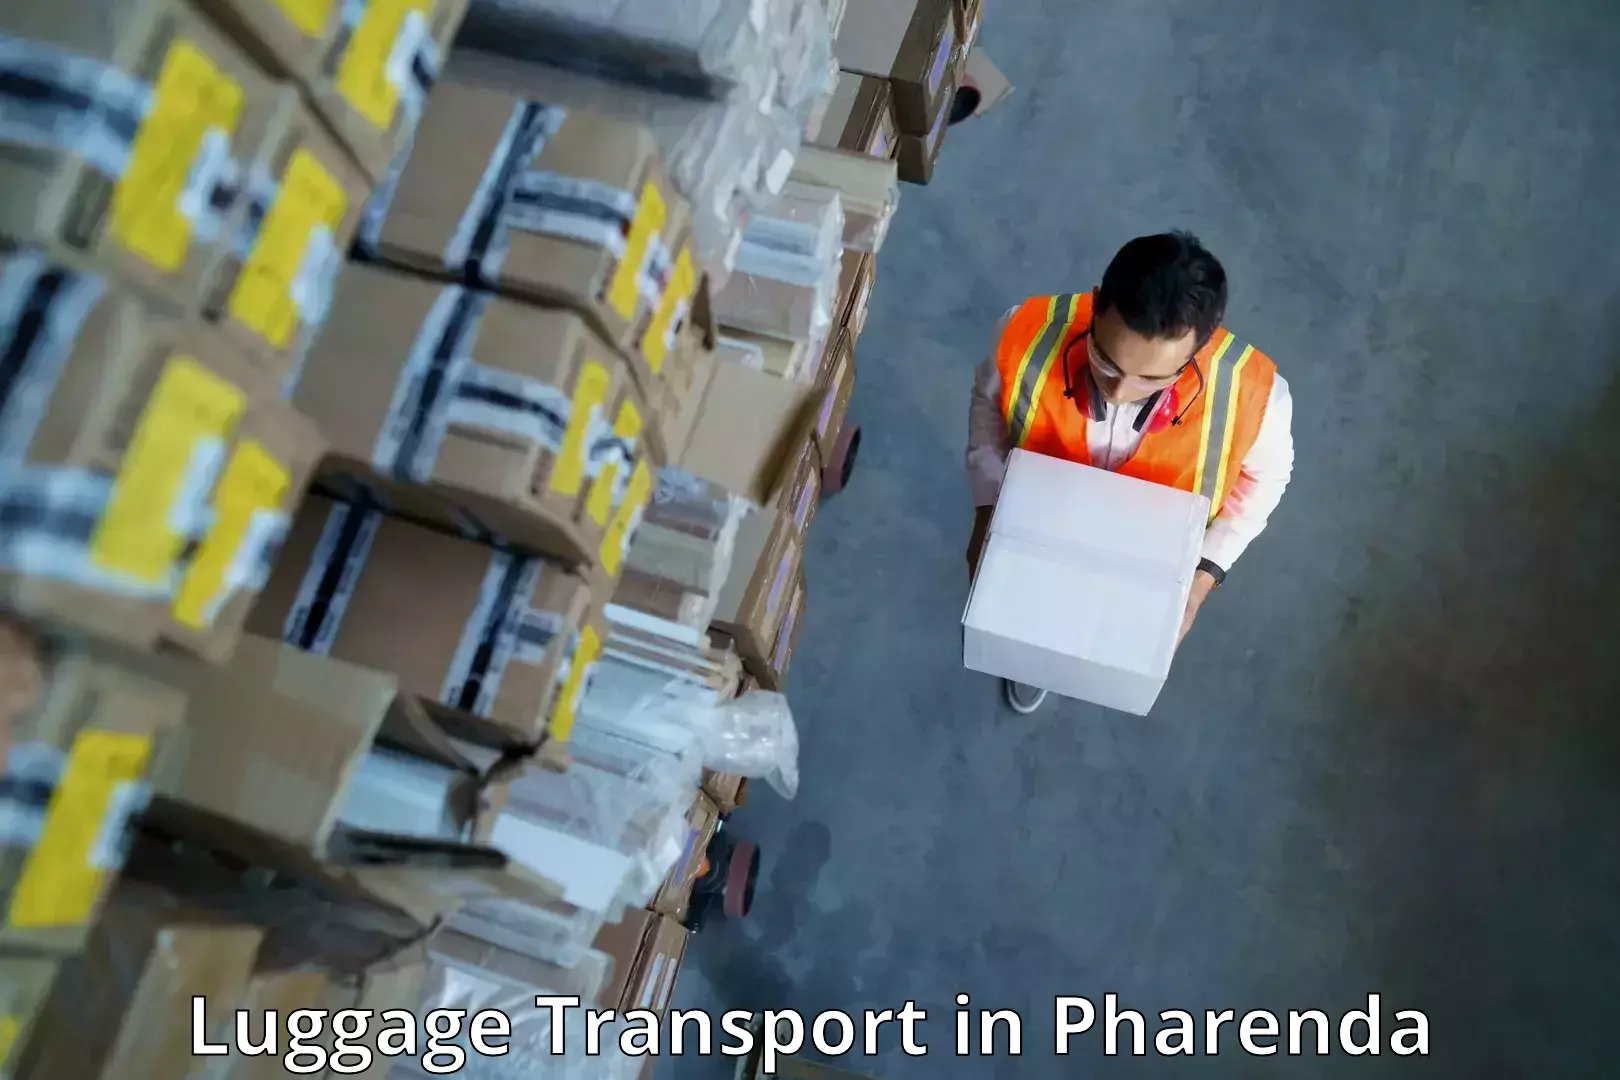 Luggage transport consultancy in Pharenda